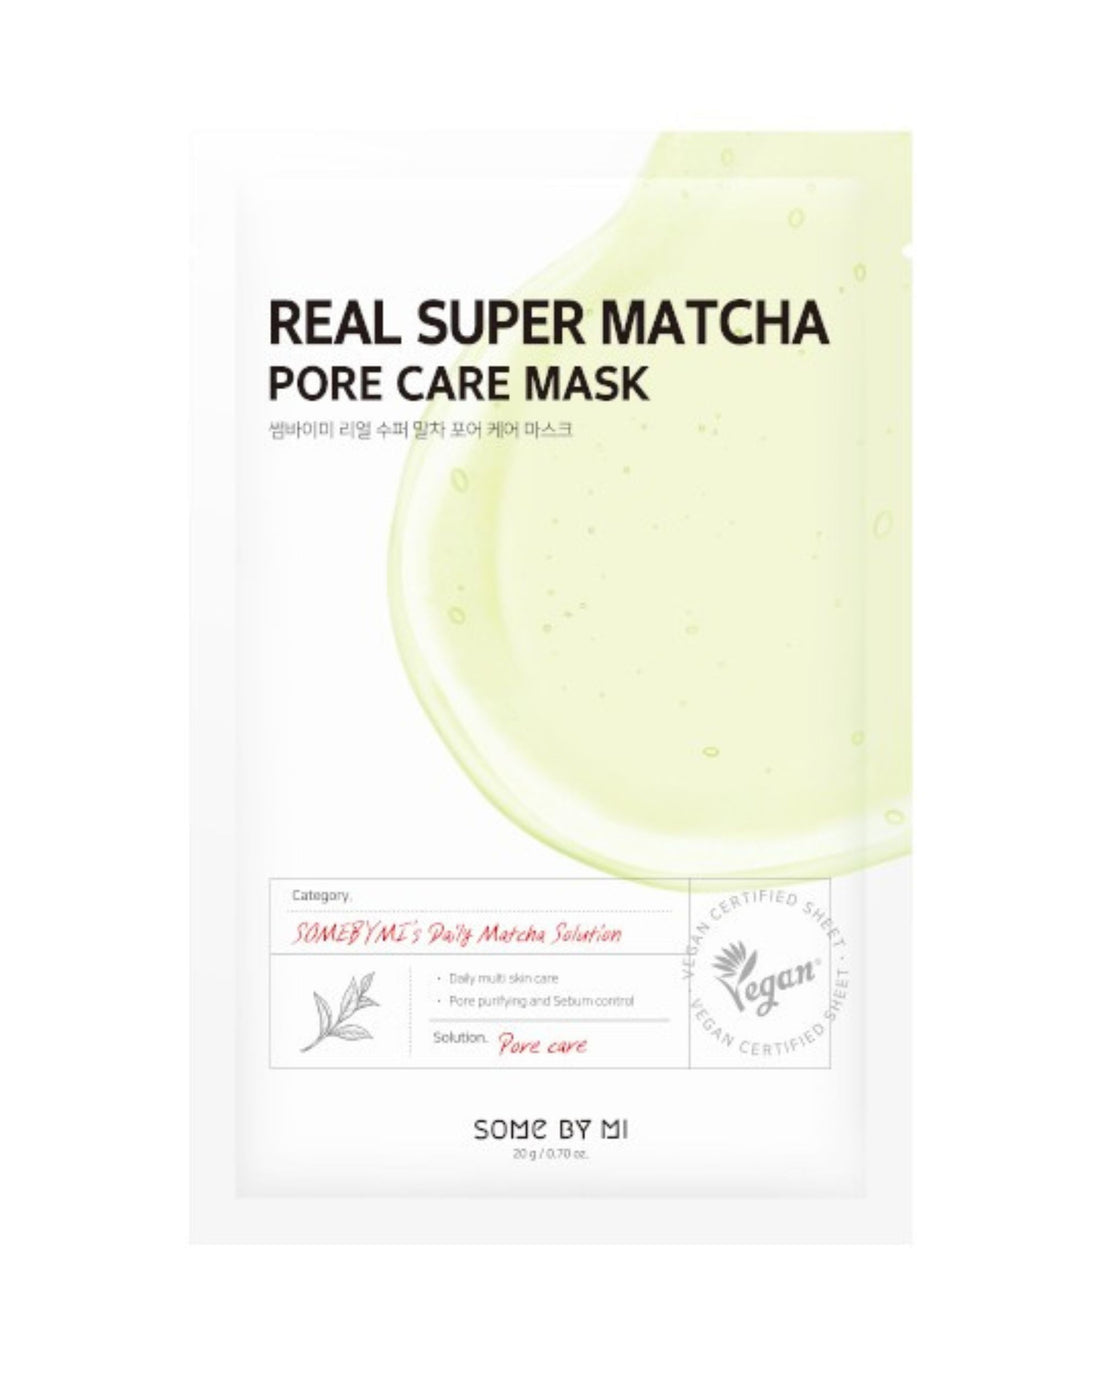 Real Super Matcha Pore Care Mask